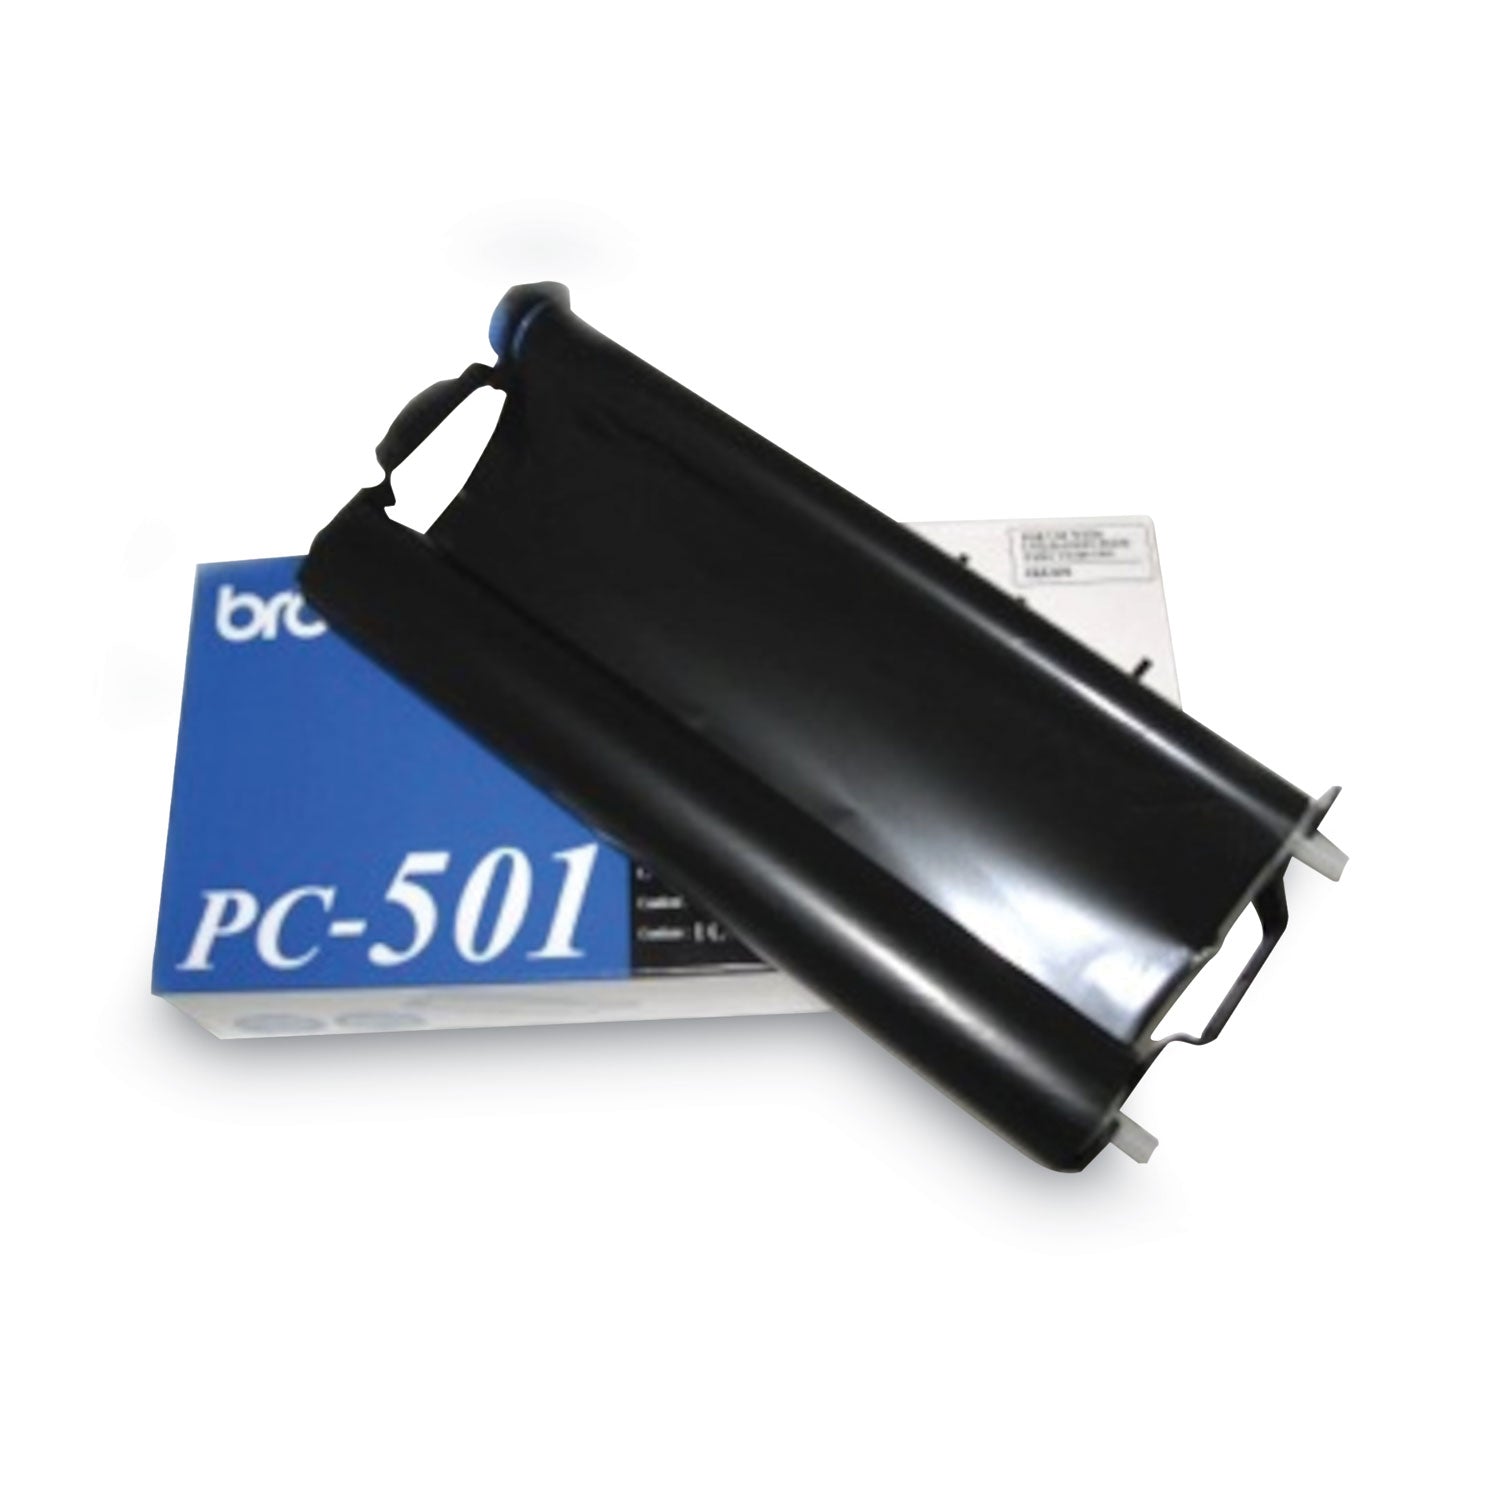 PC-501 Thermal Transfer Print Cartridge, 150 Page-Yield, Black - 